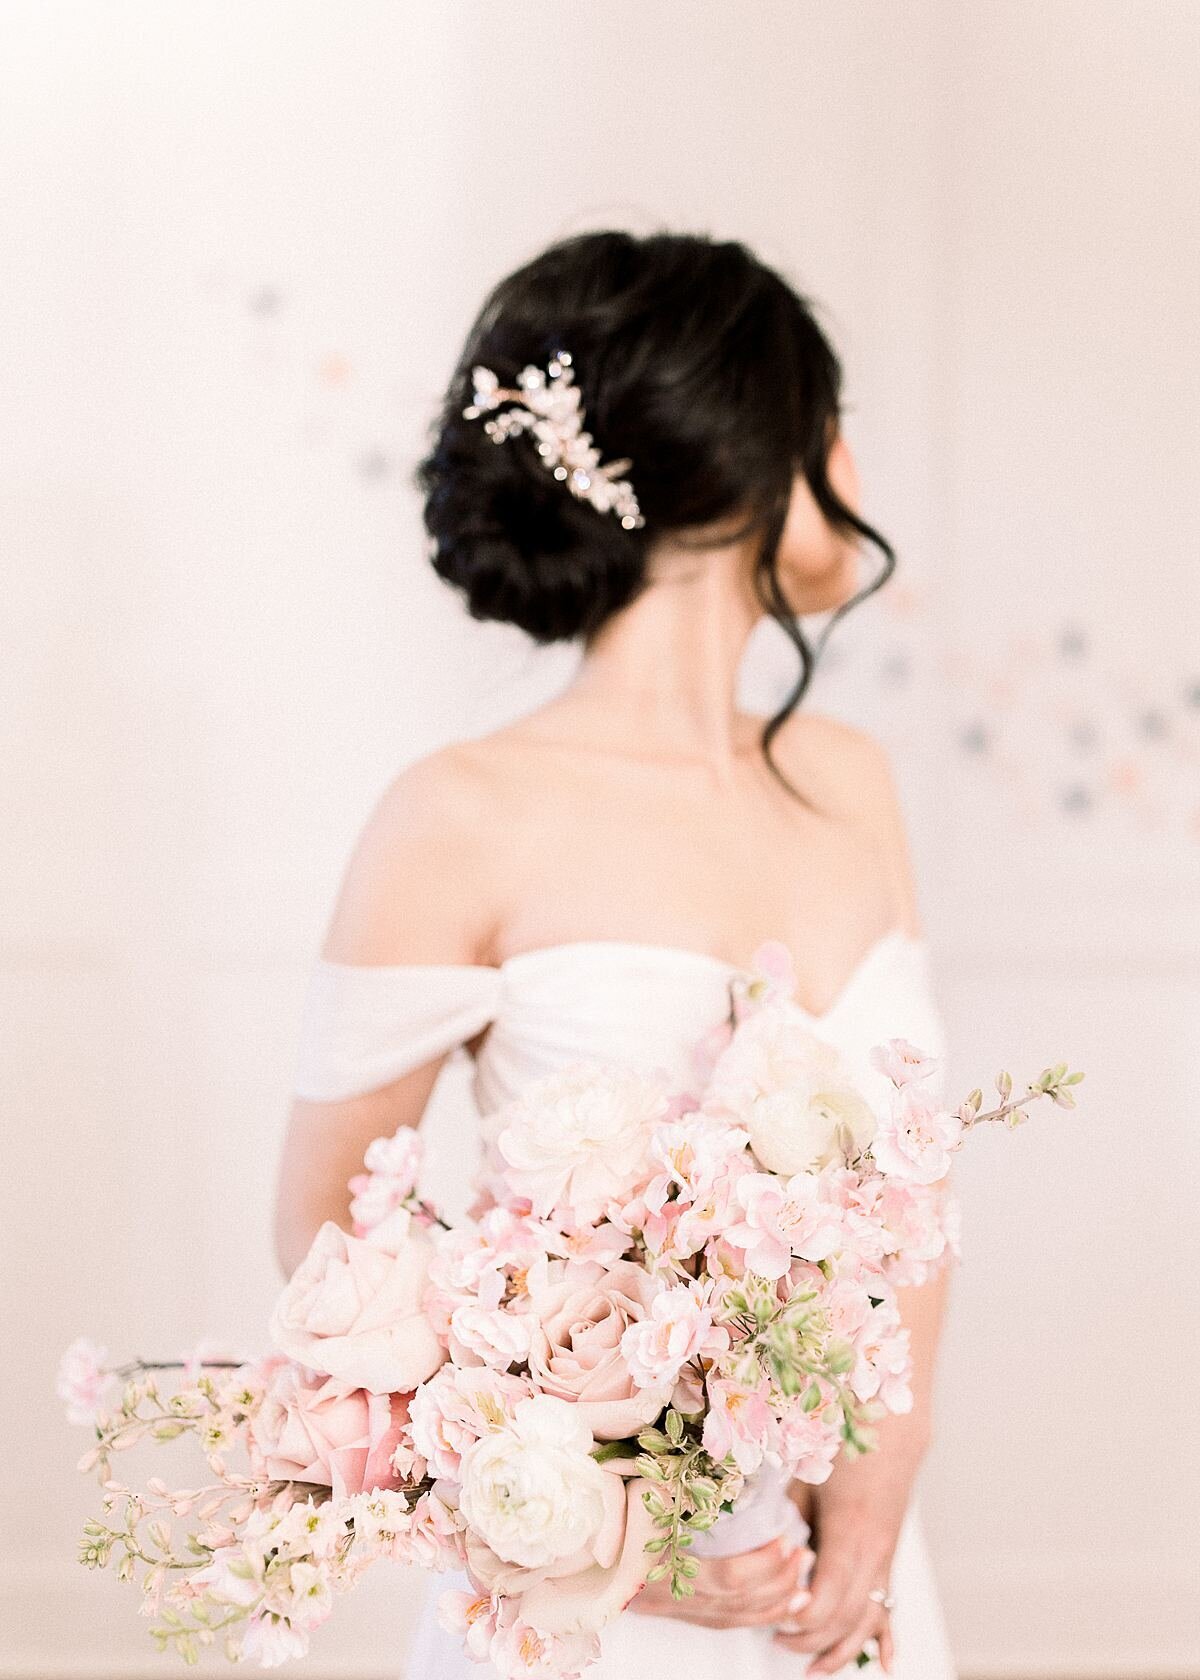 Anna-Wright-Photography-Cherry-Blossom-Photographer-Japanese-Jewish-Wedding_0704